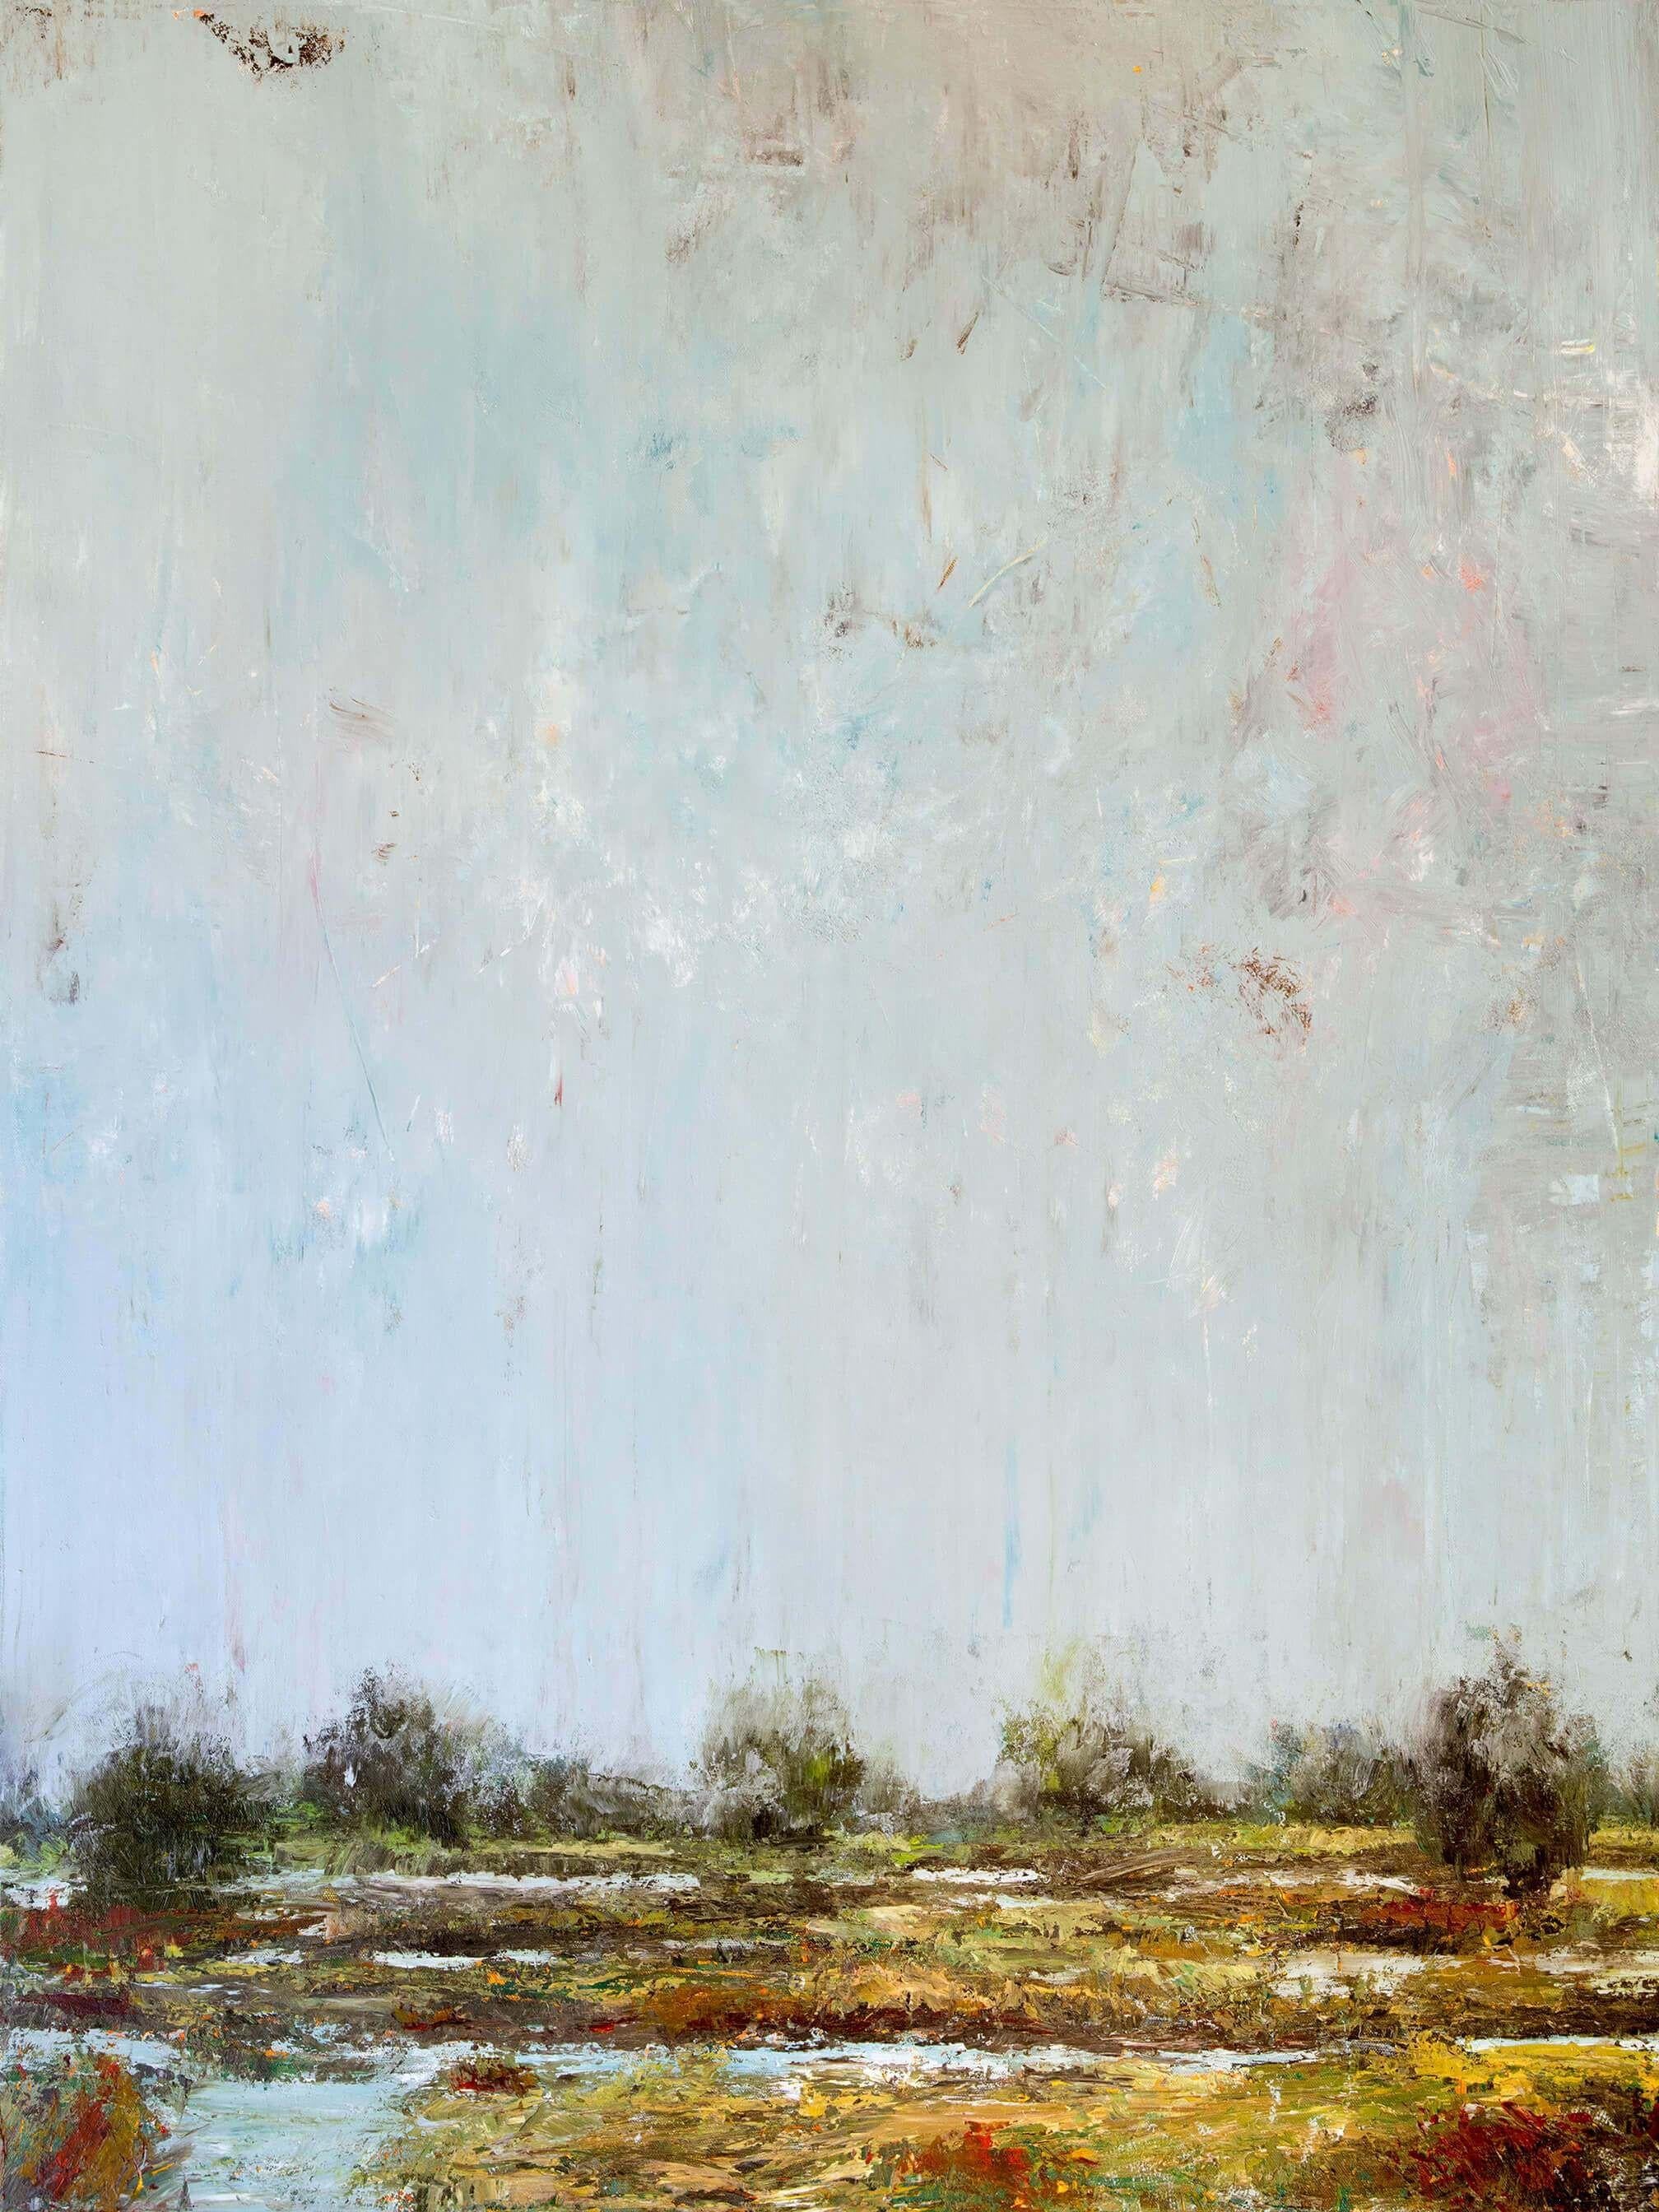 John Beard Landscape Painting – SHEM CREEK, Contemporary Rural Landscape Fine Art auf Giclee-Leinwand: 48 "H x 36 "W